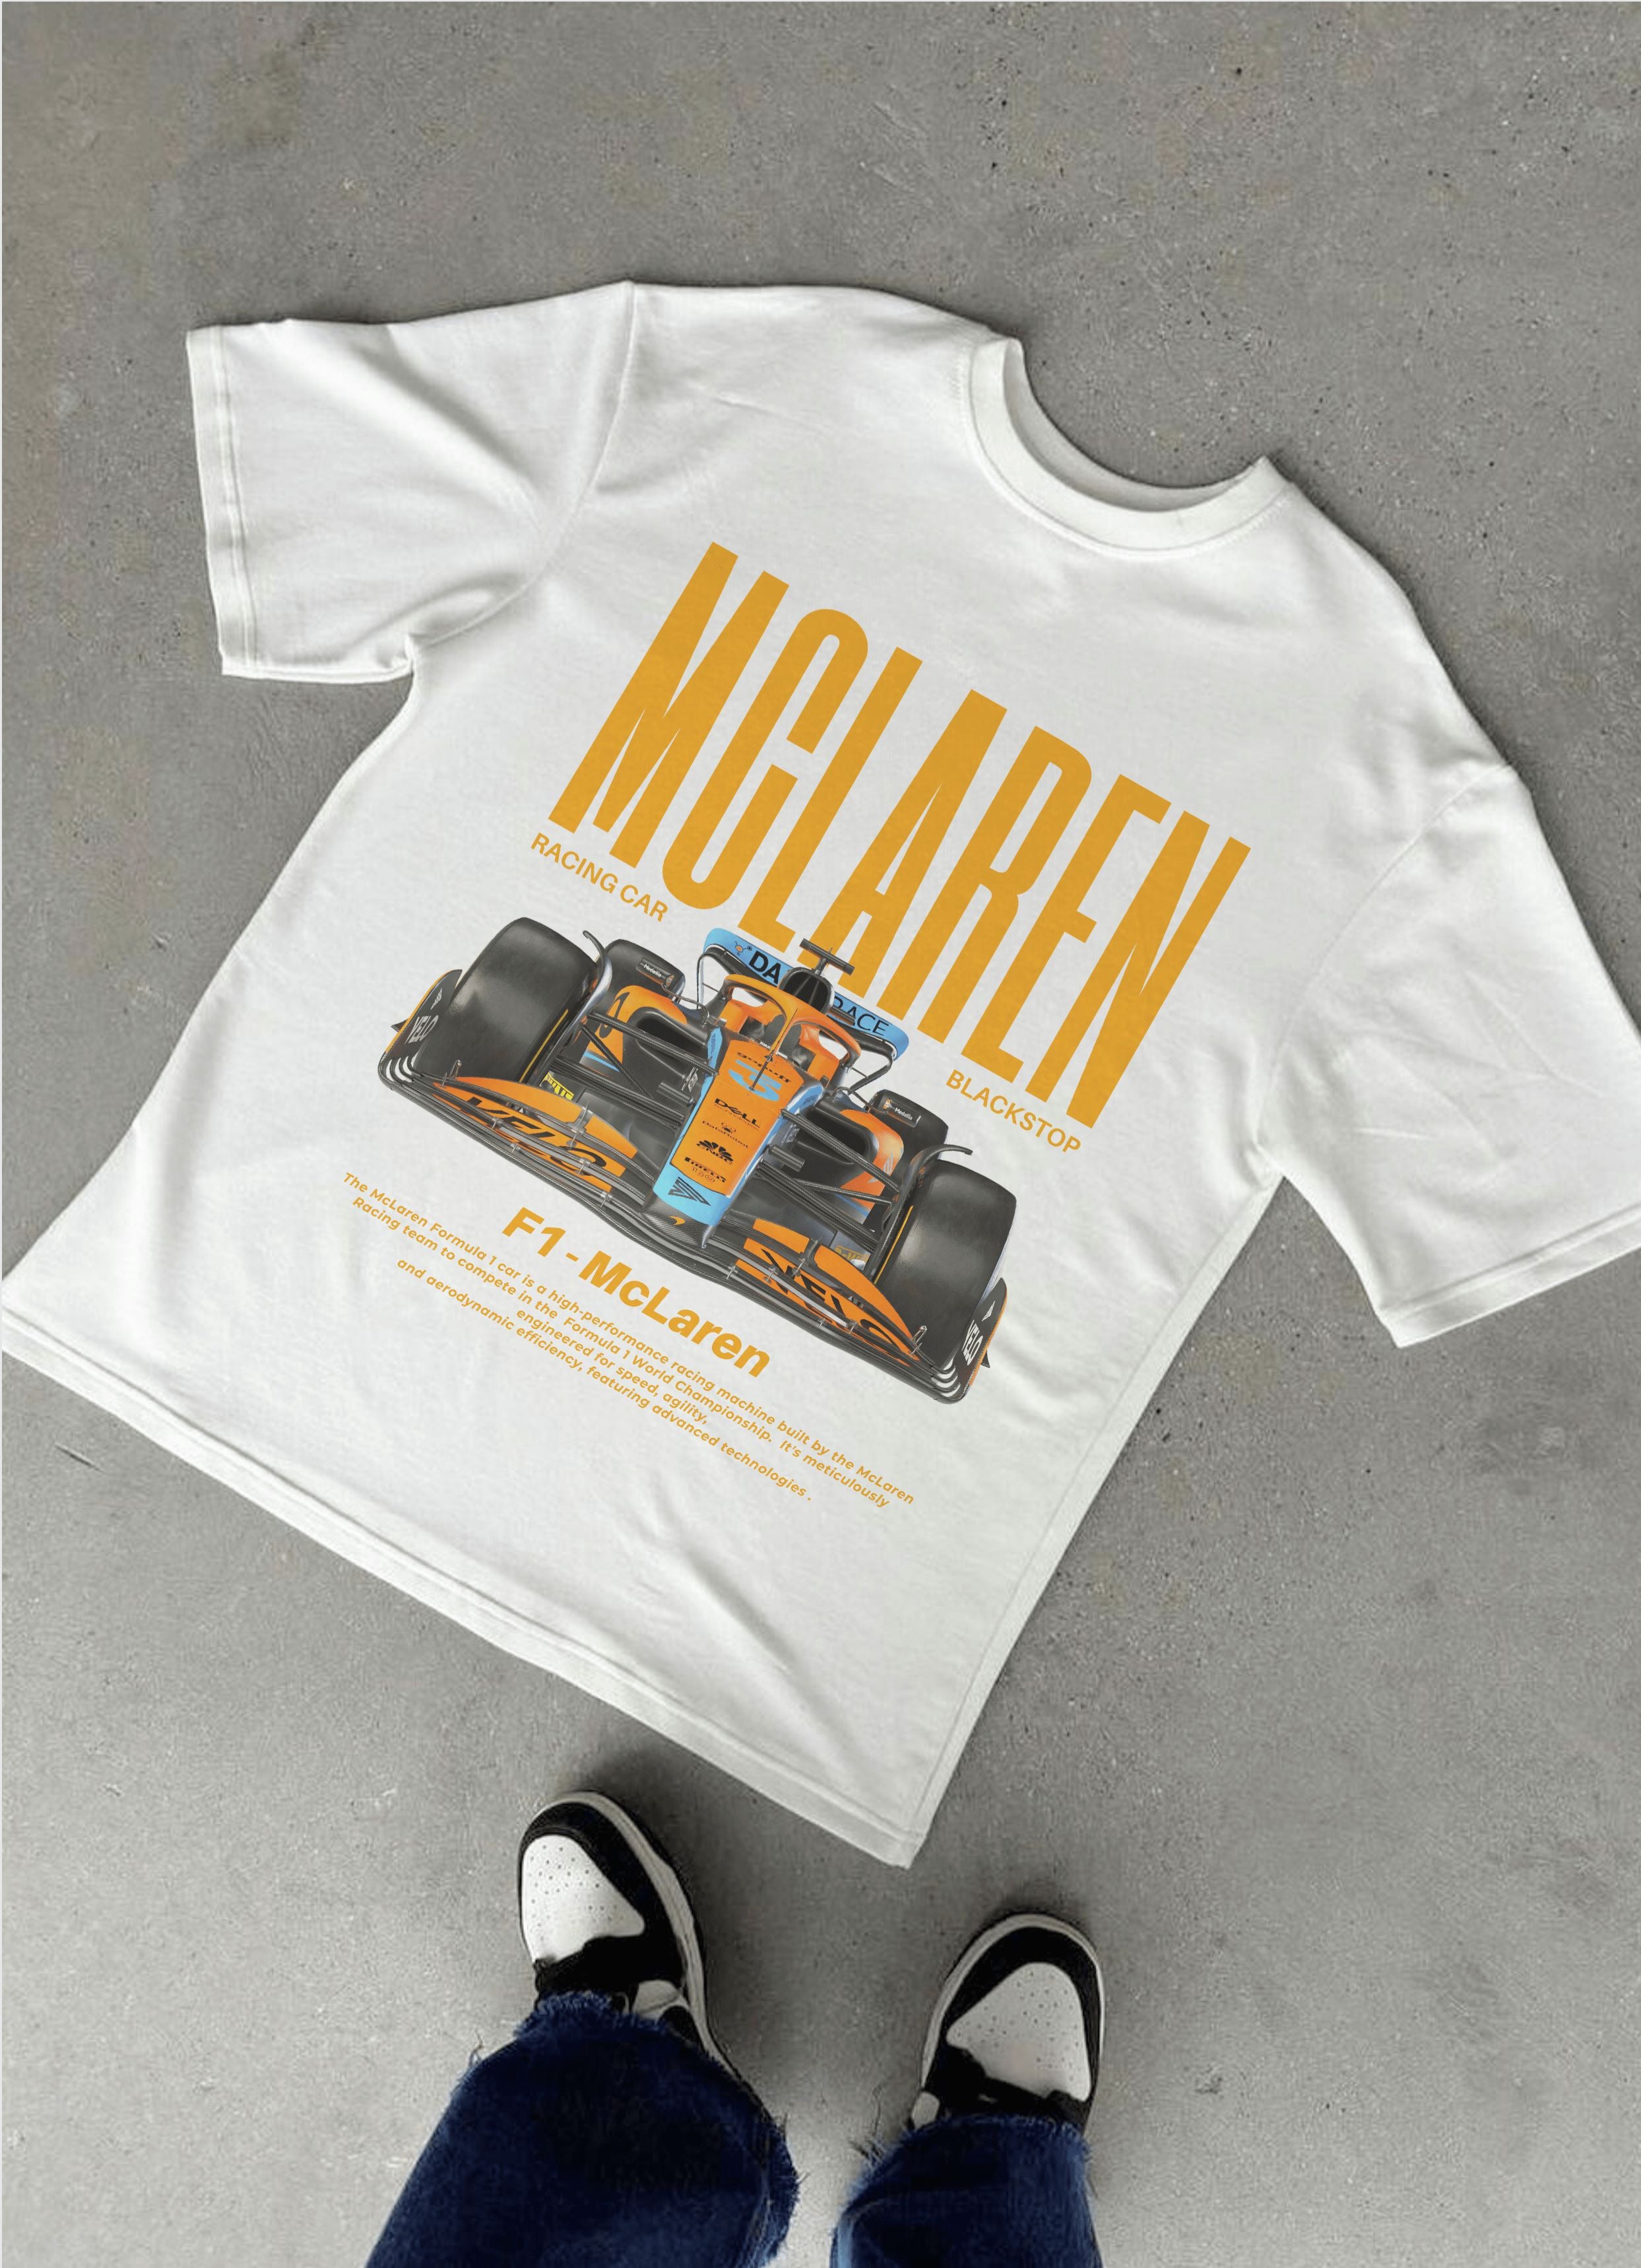 McLaren Front Oversized T-shirt